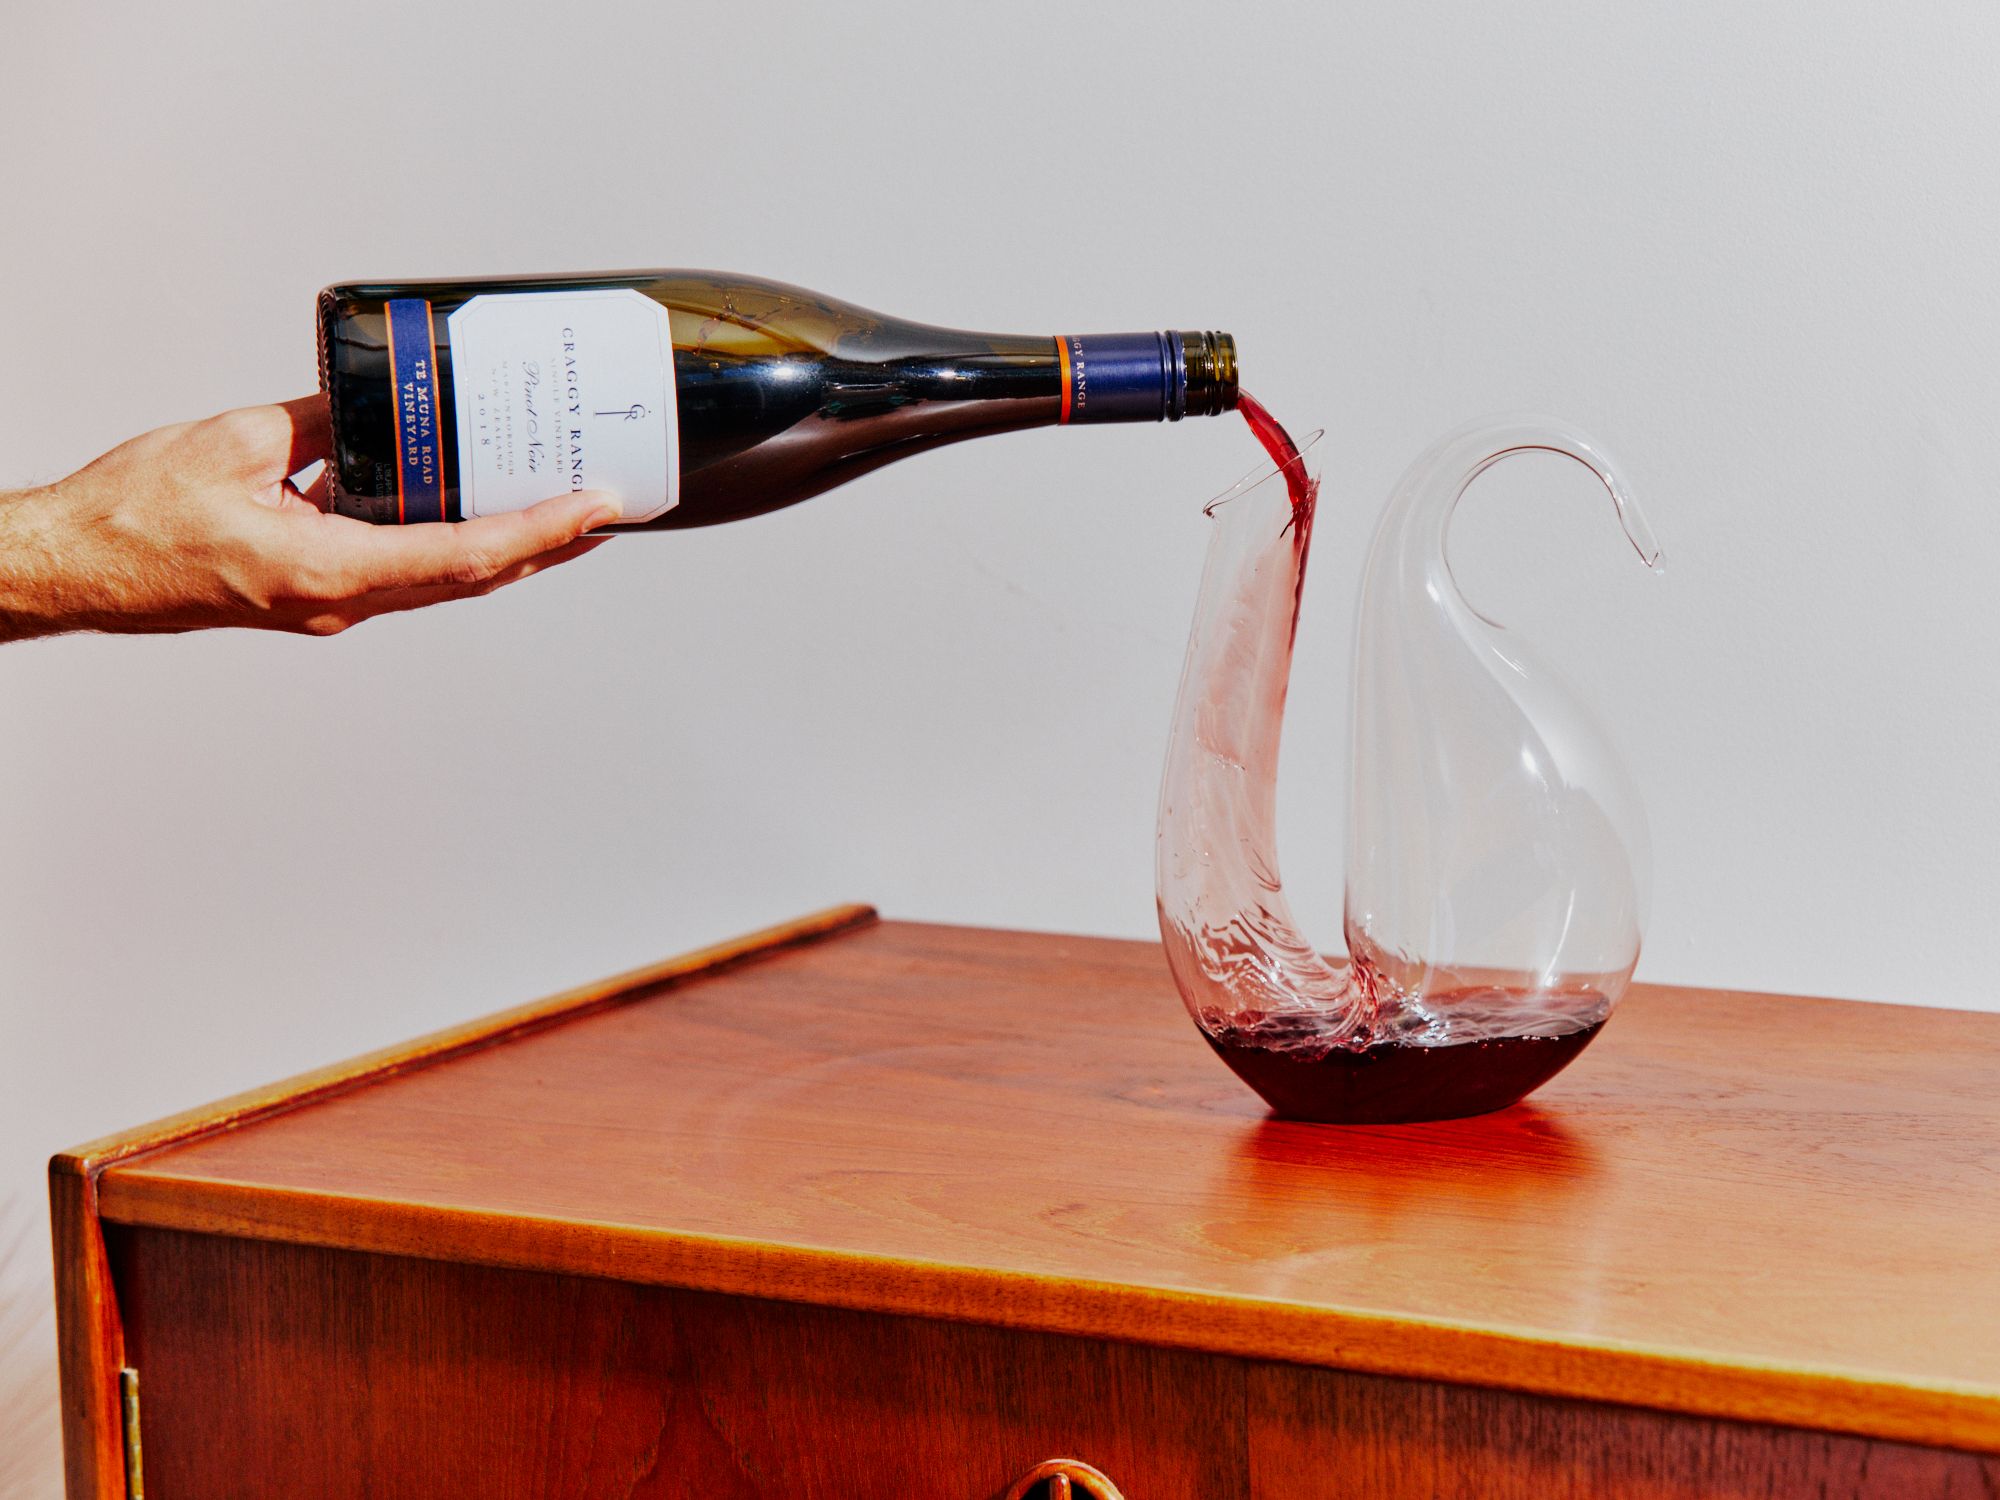 International Merlot Day: 15 award-winning wines to try - Decanter